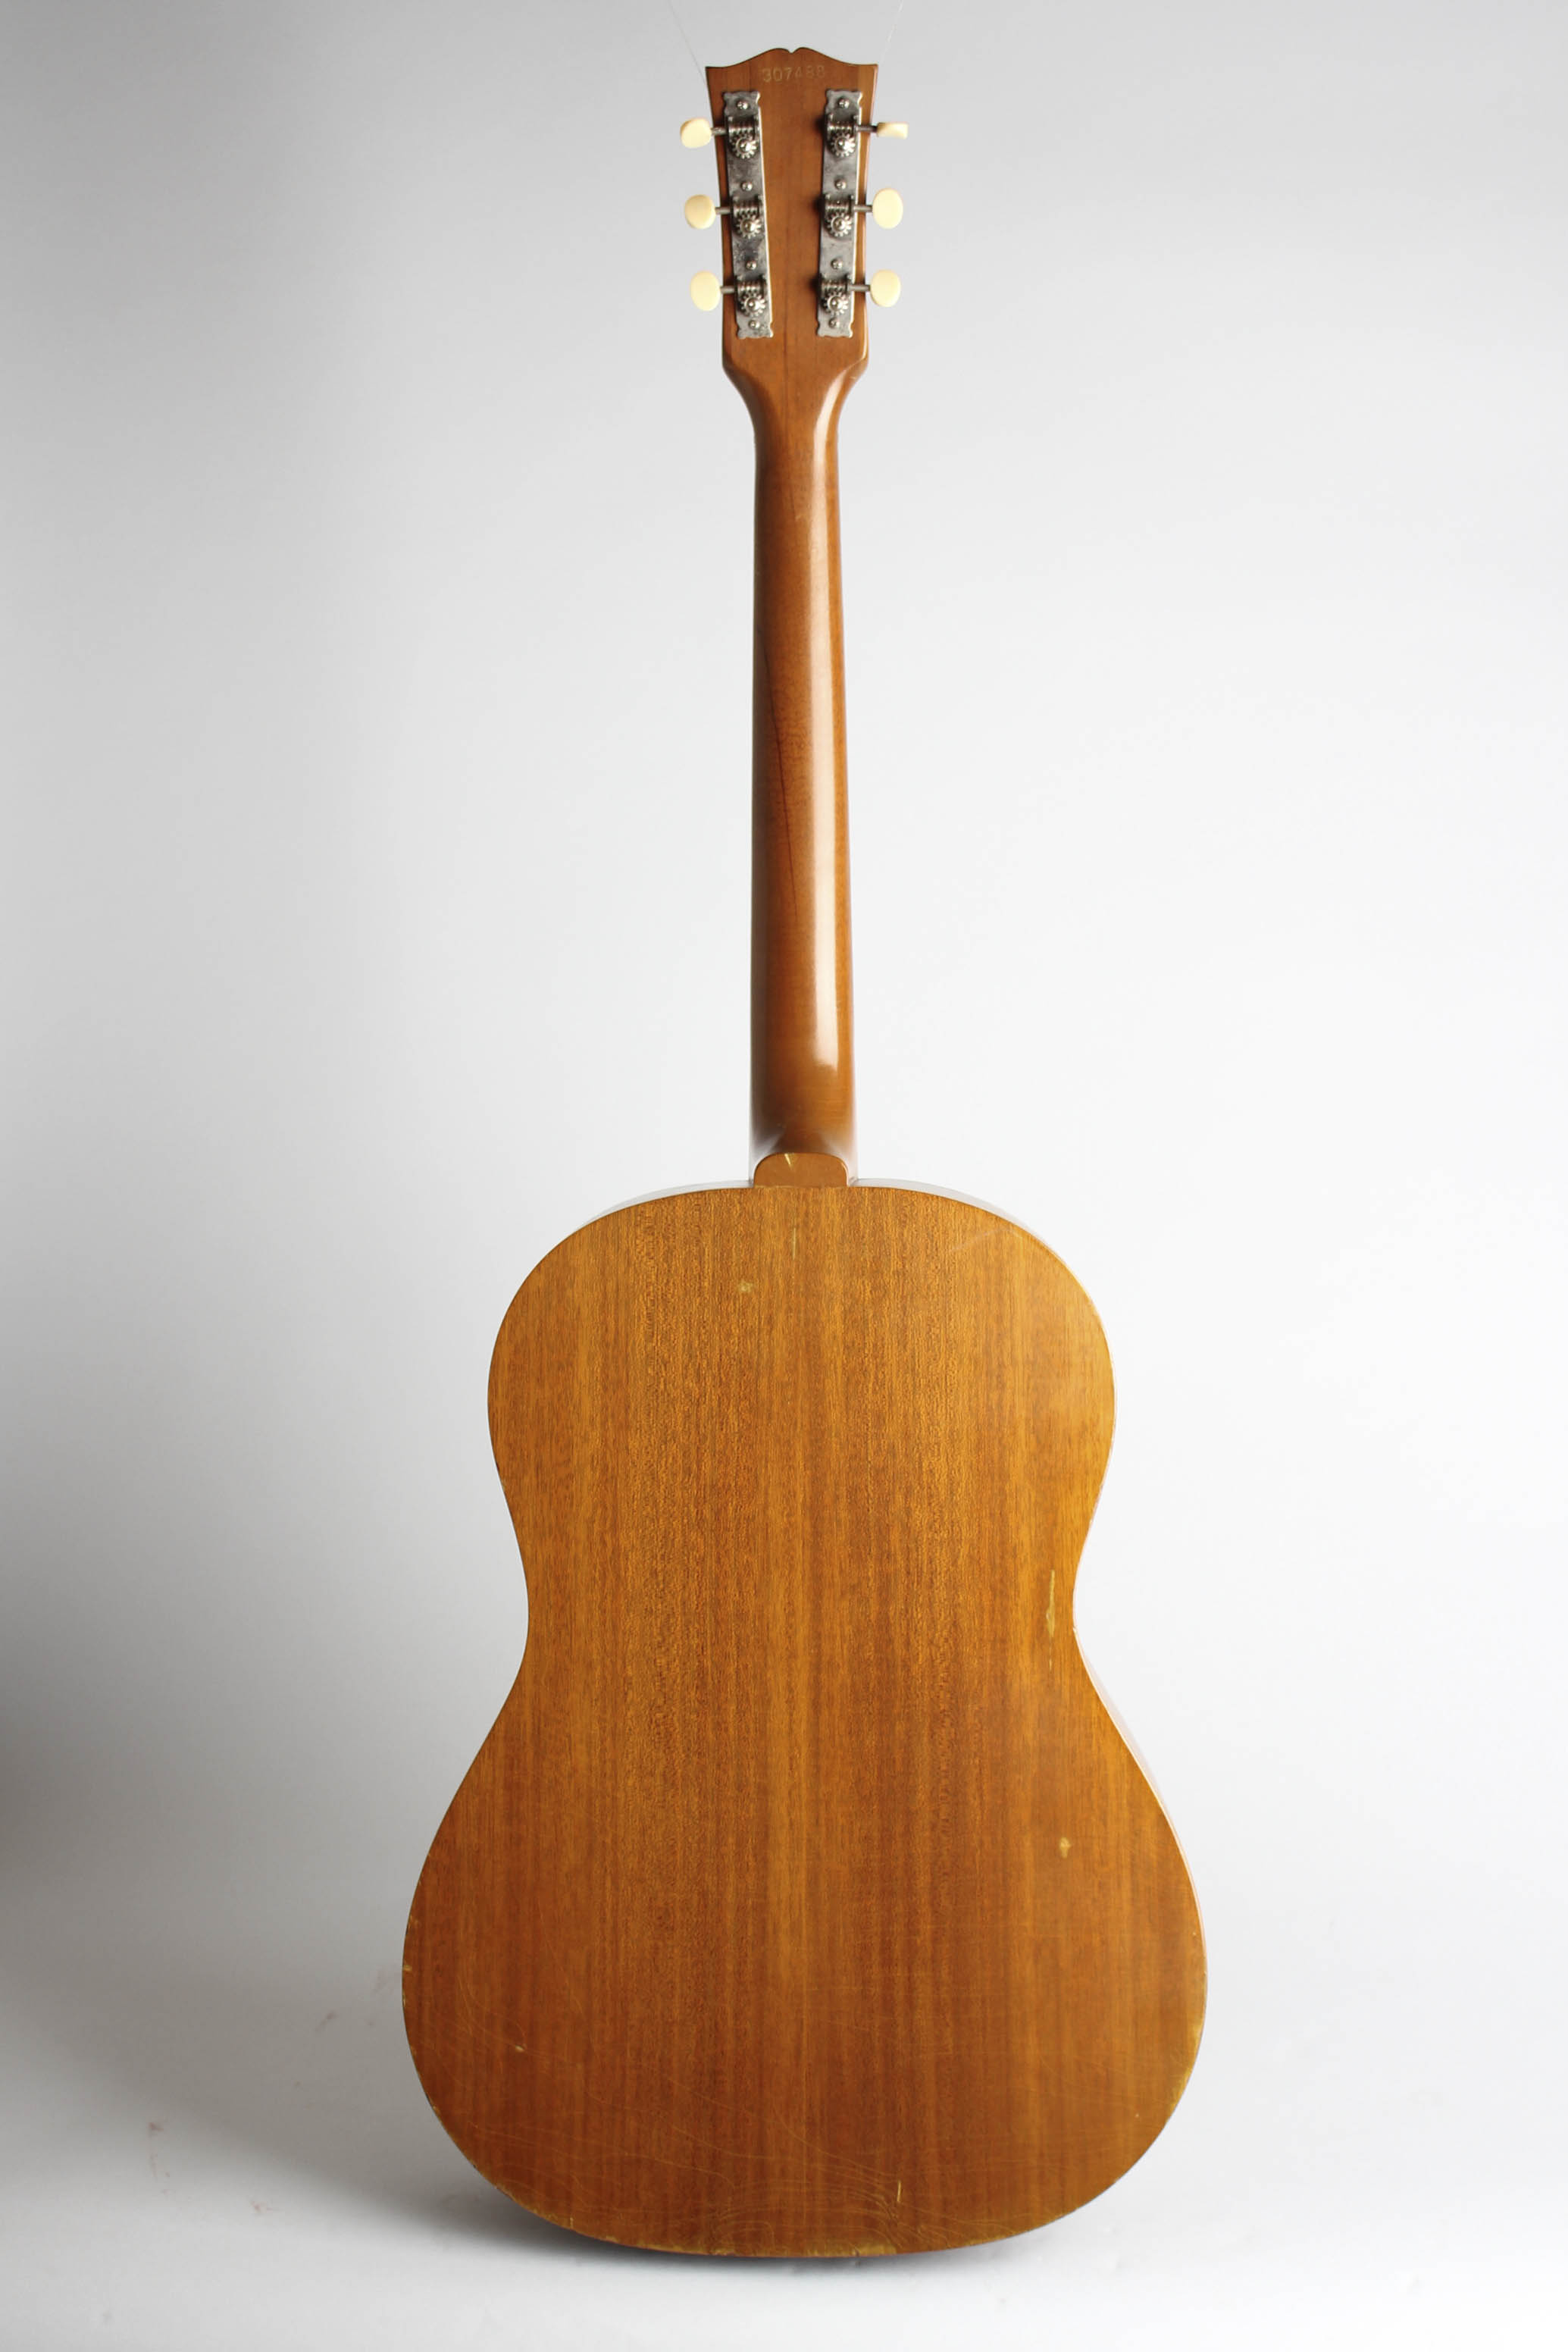 Gibson LG-0 Flat Top Acoustic Guitar (1967) | RetroFret